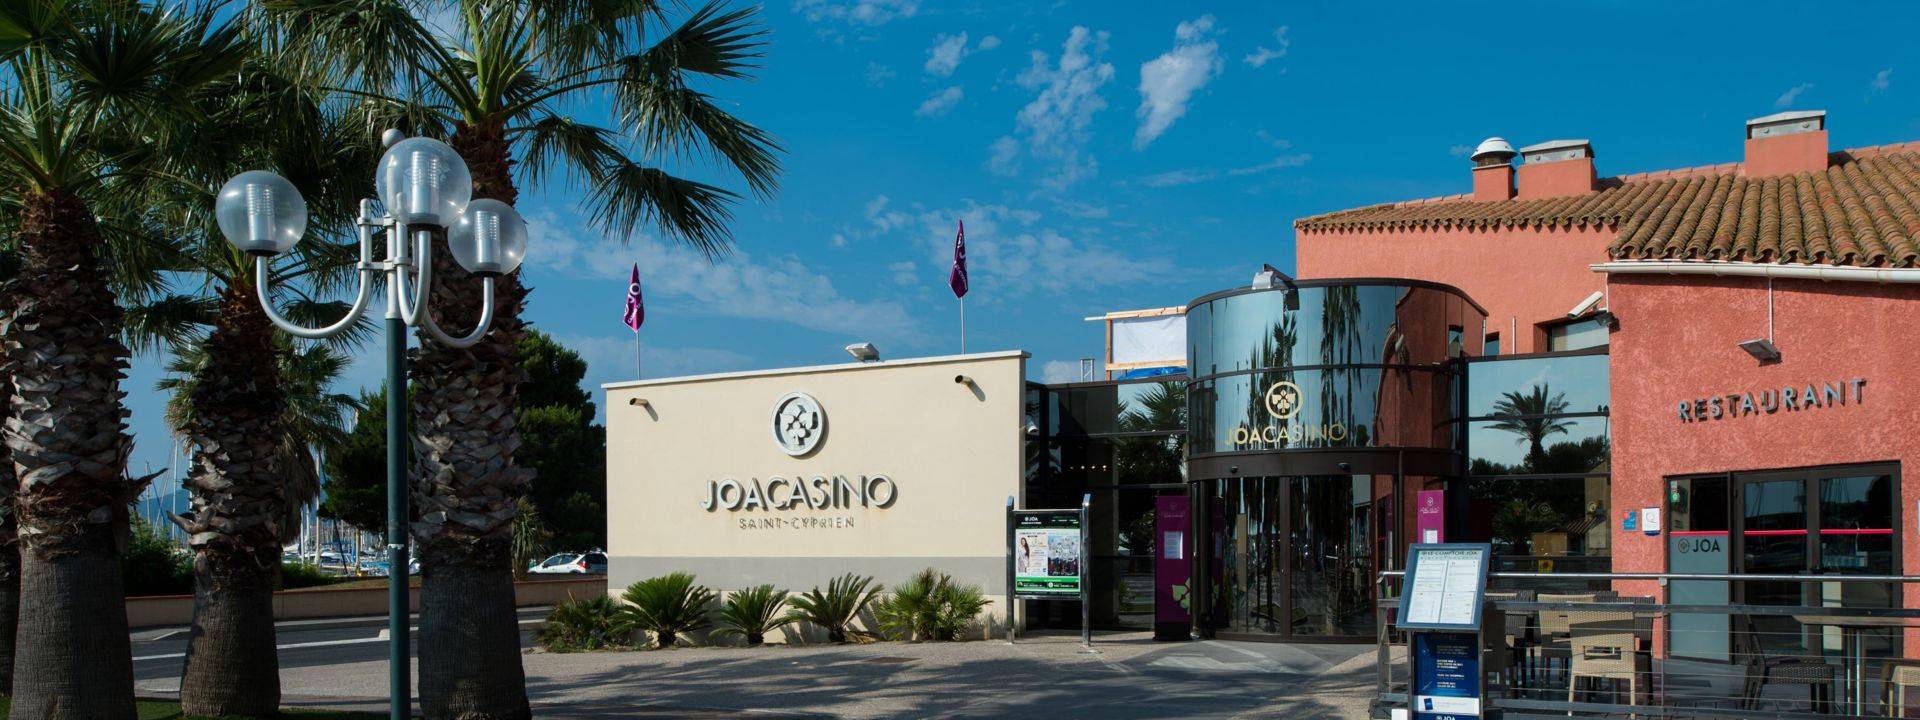 Casino JOA St-Cyprien